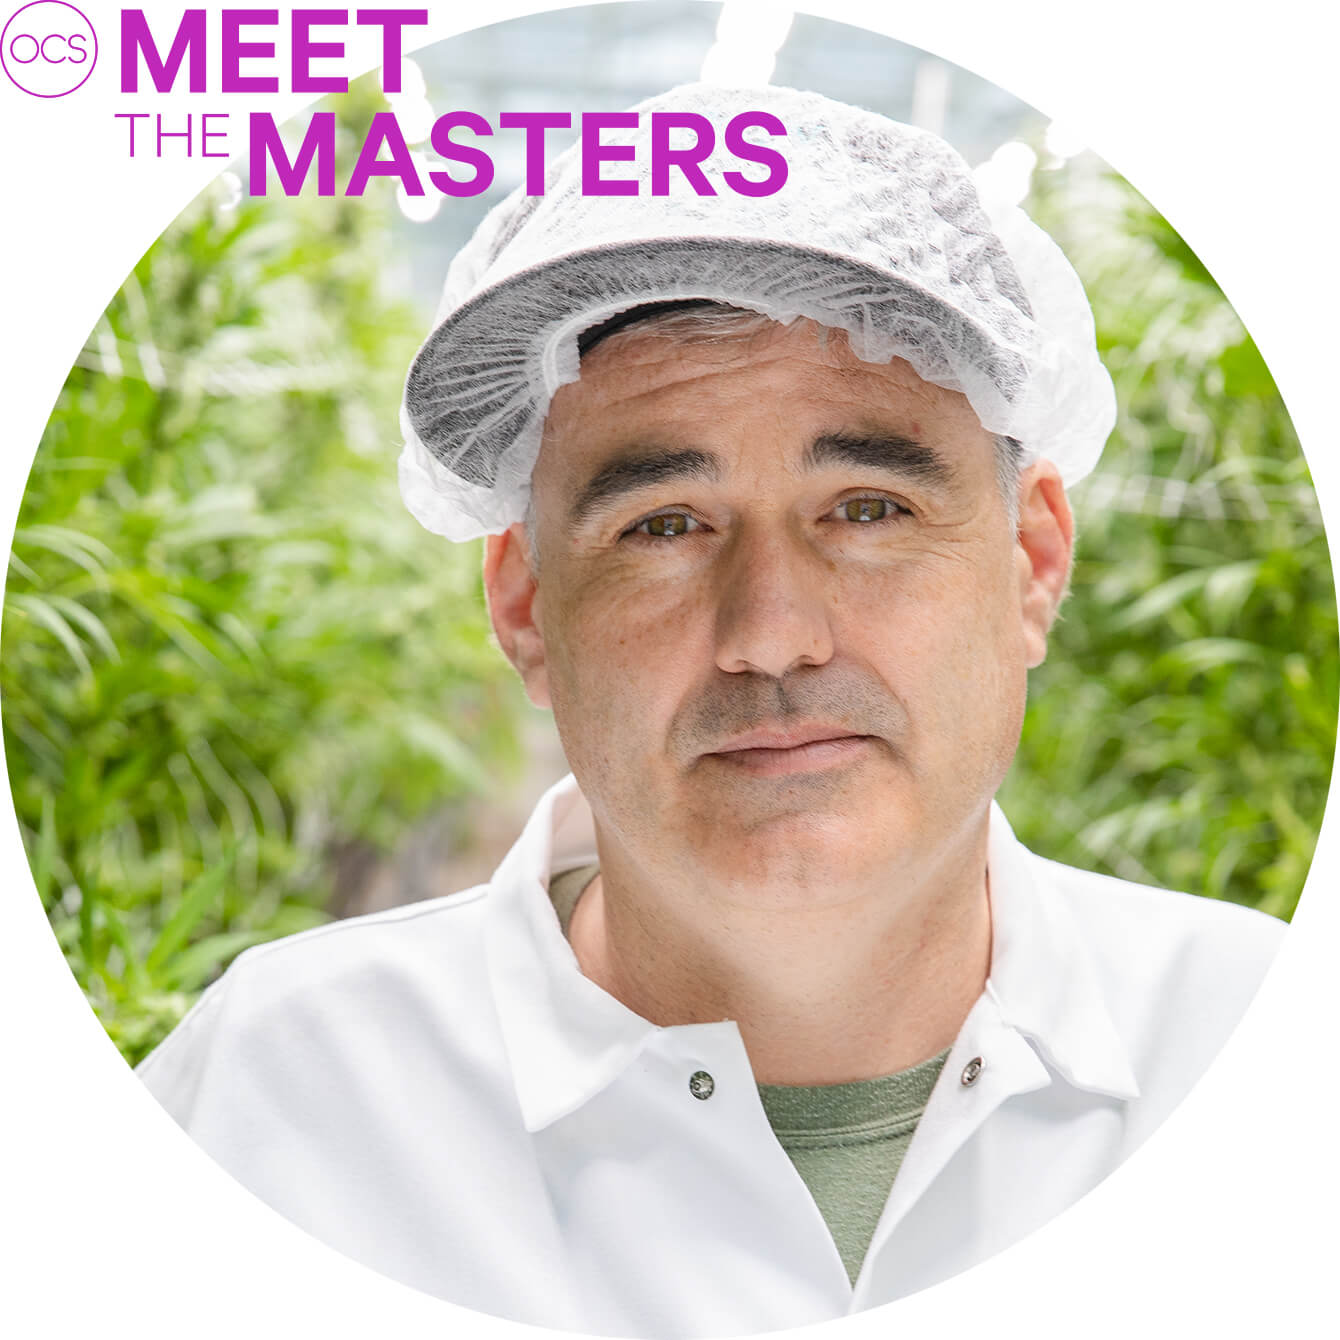 Photo of Kris LeBlanc, Master Grower at The Green Organic Dutchman